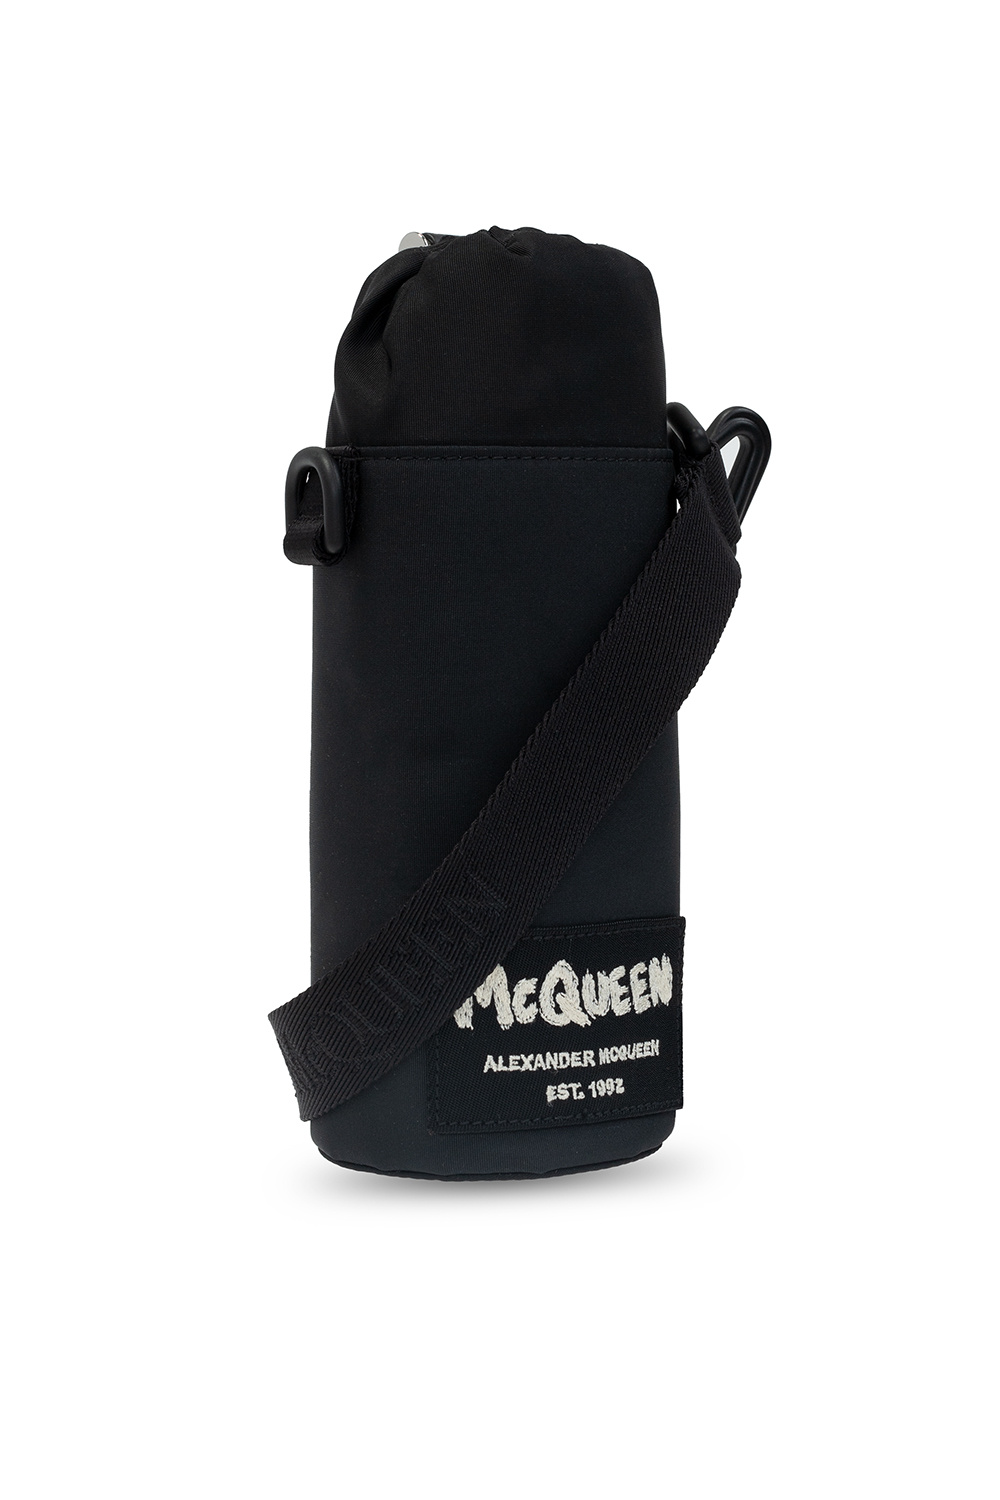 Alexander McQueen alexander mcqueen logo print mini bag item